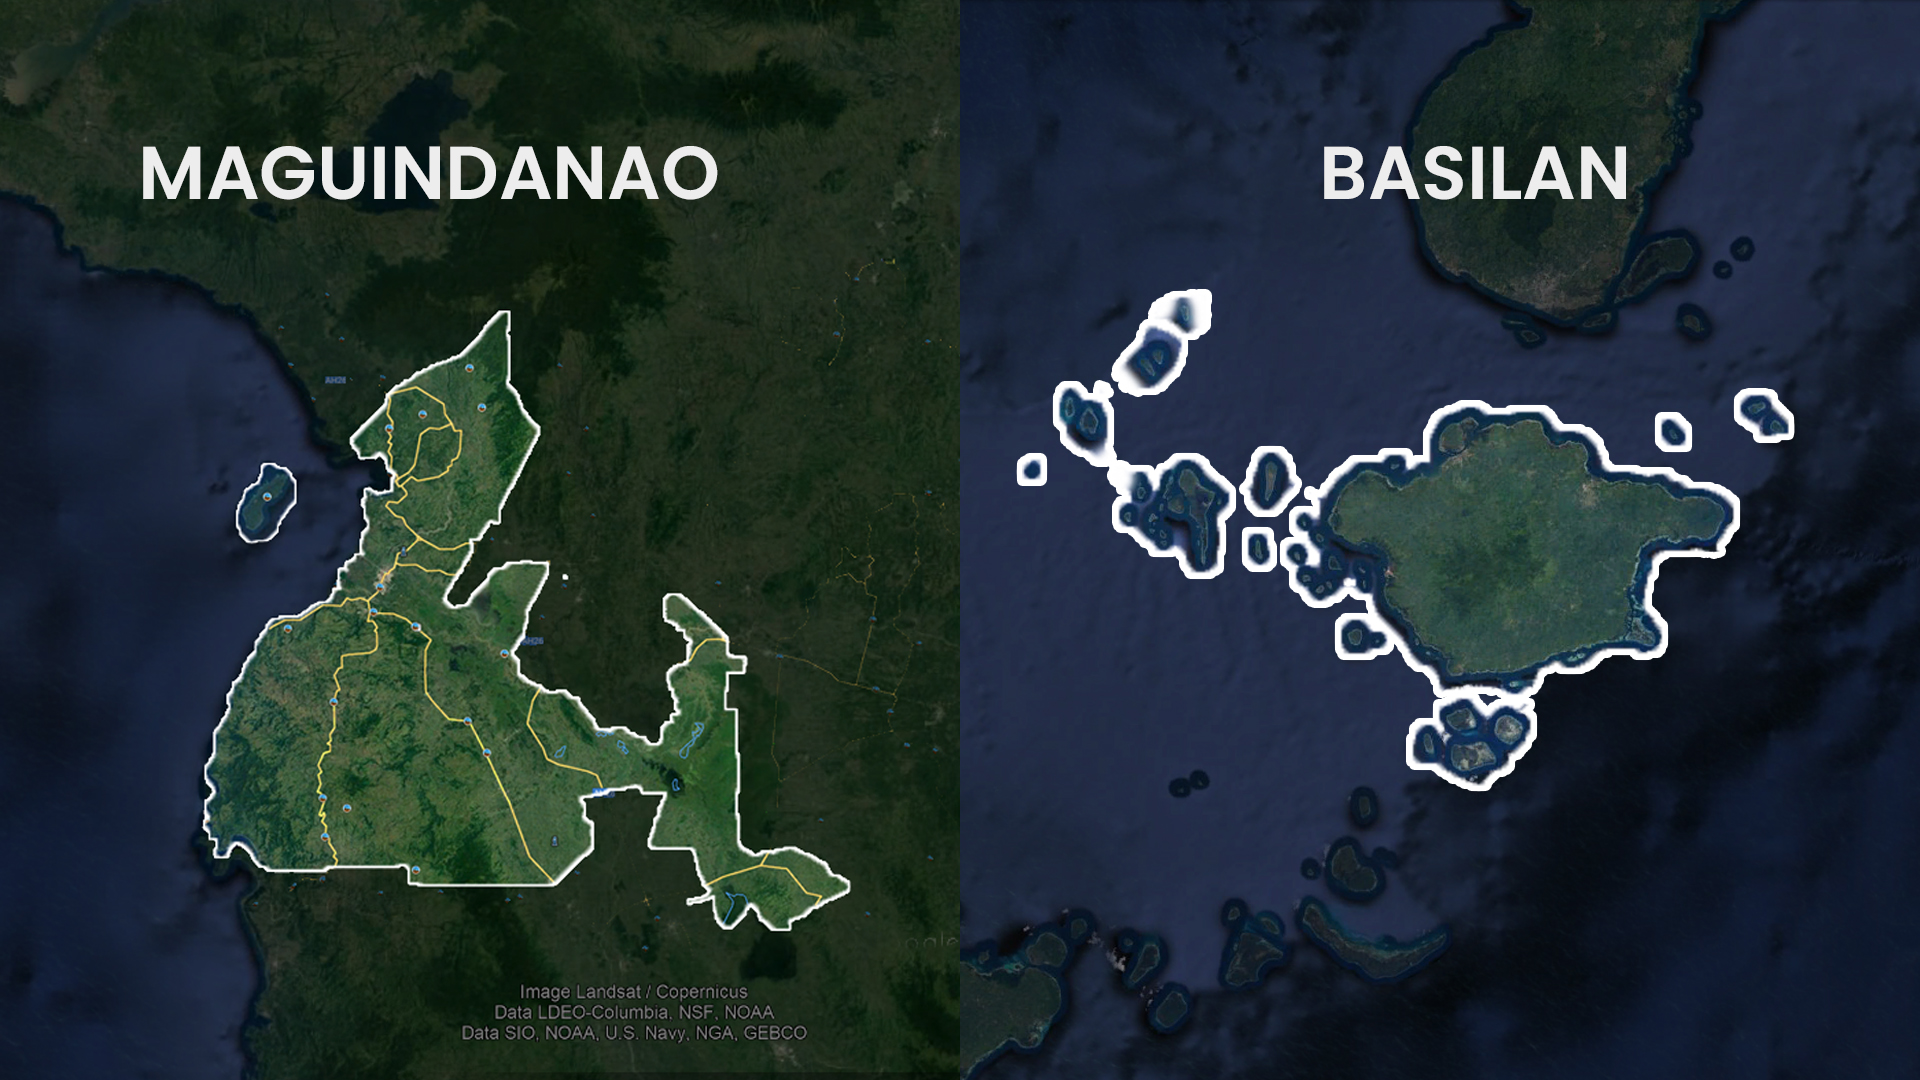 BARMM bills seek to establish hospitals in Maguindanao and Basilan